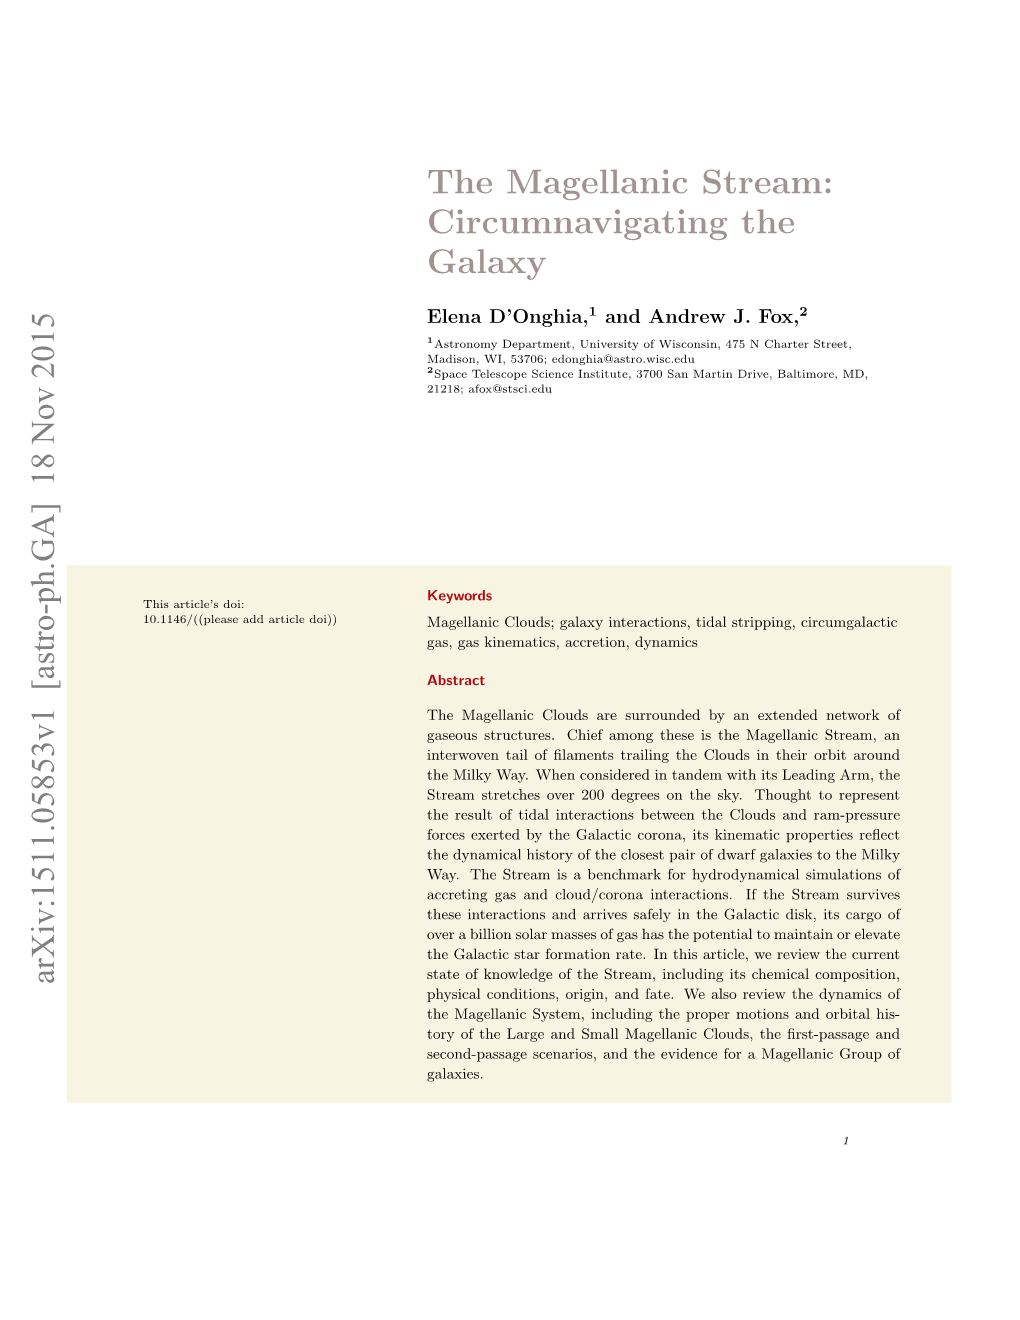 The Magellanic Stream: Circumnavigating the Galaxy